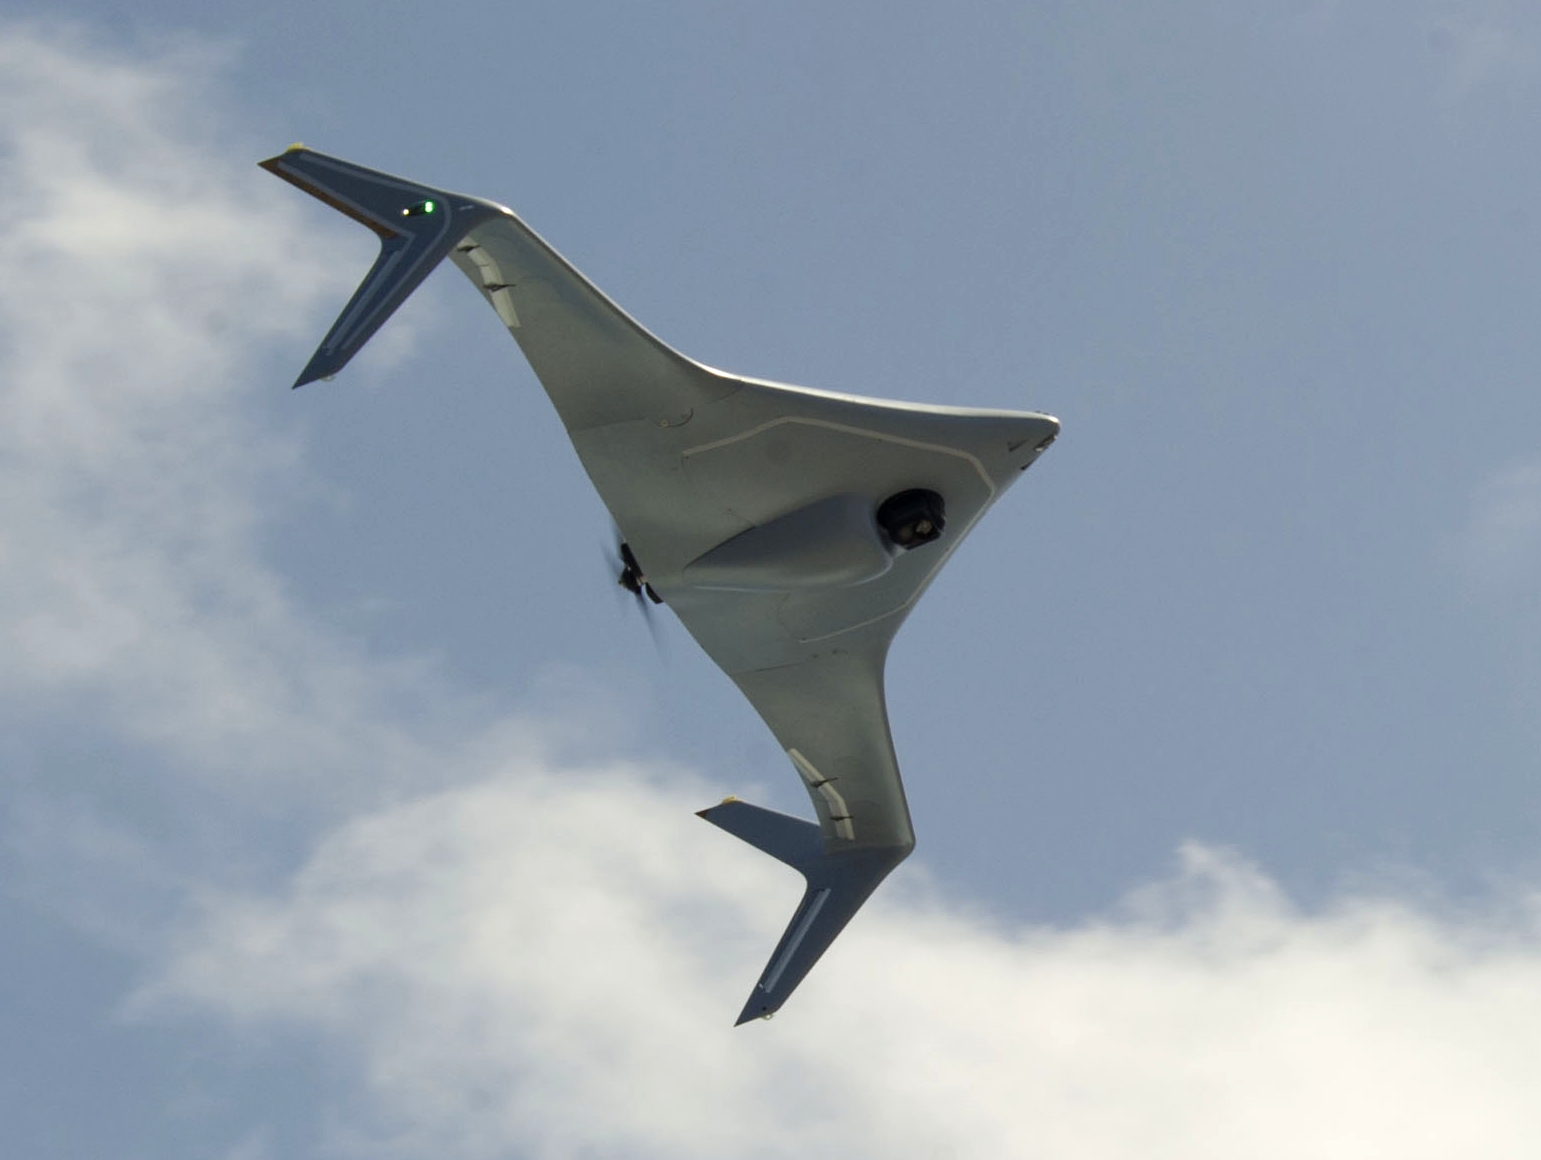 Northrop_Grumman_Bat_UAV_in_flight_in_June_2014.JPG